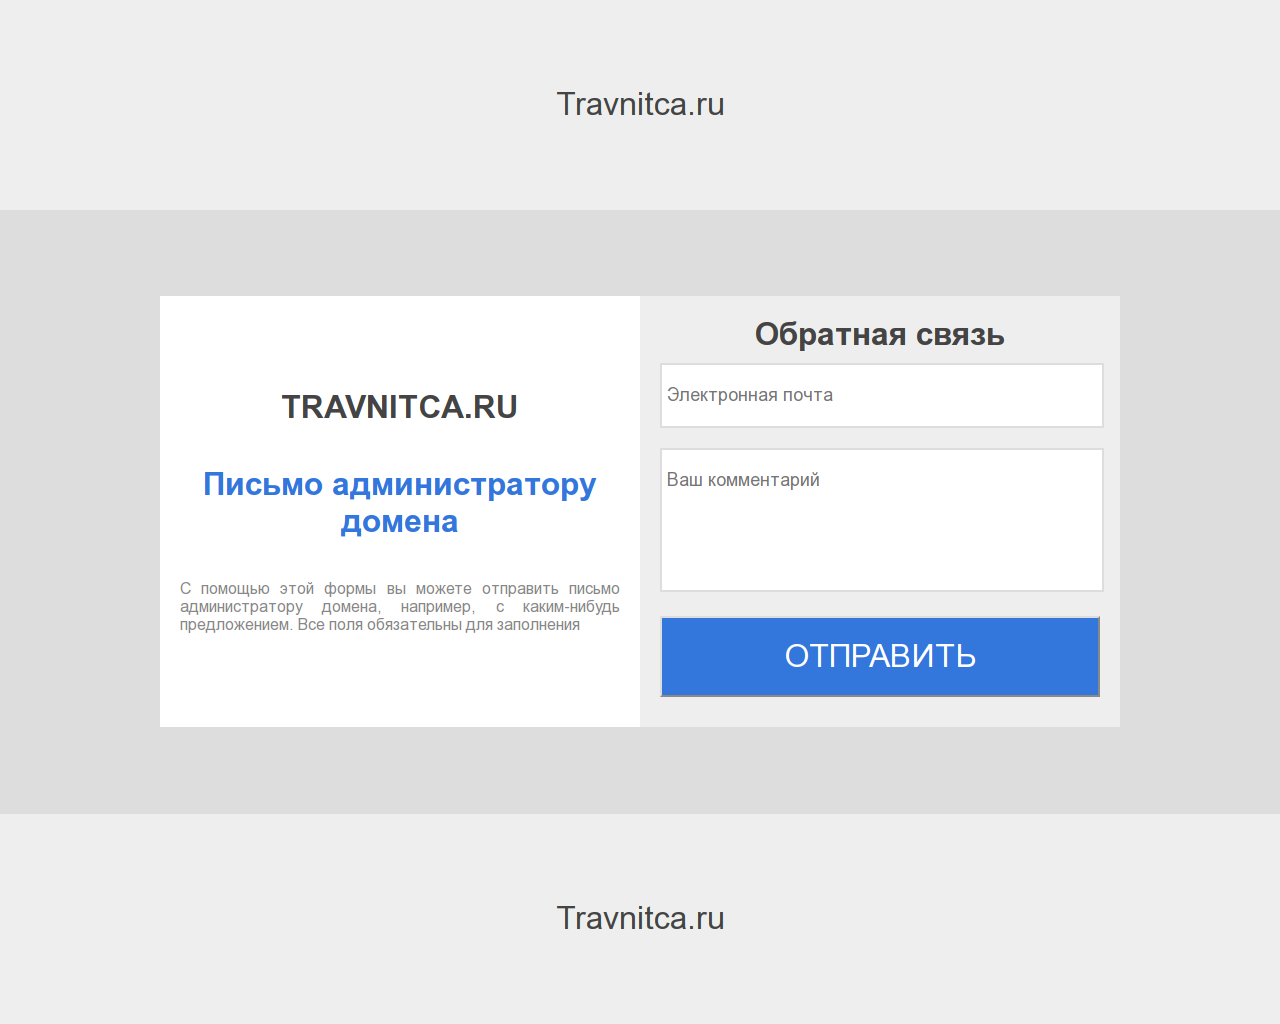 Изображение сайта travnitca.ru в разрешении 1280x1024